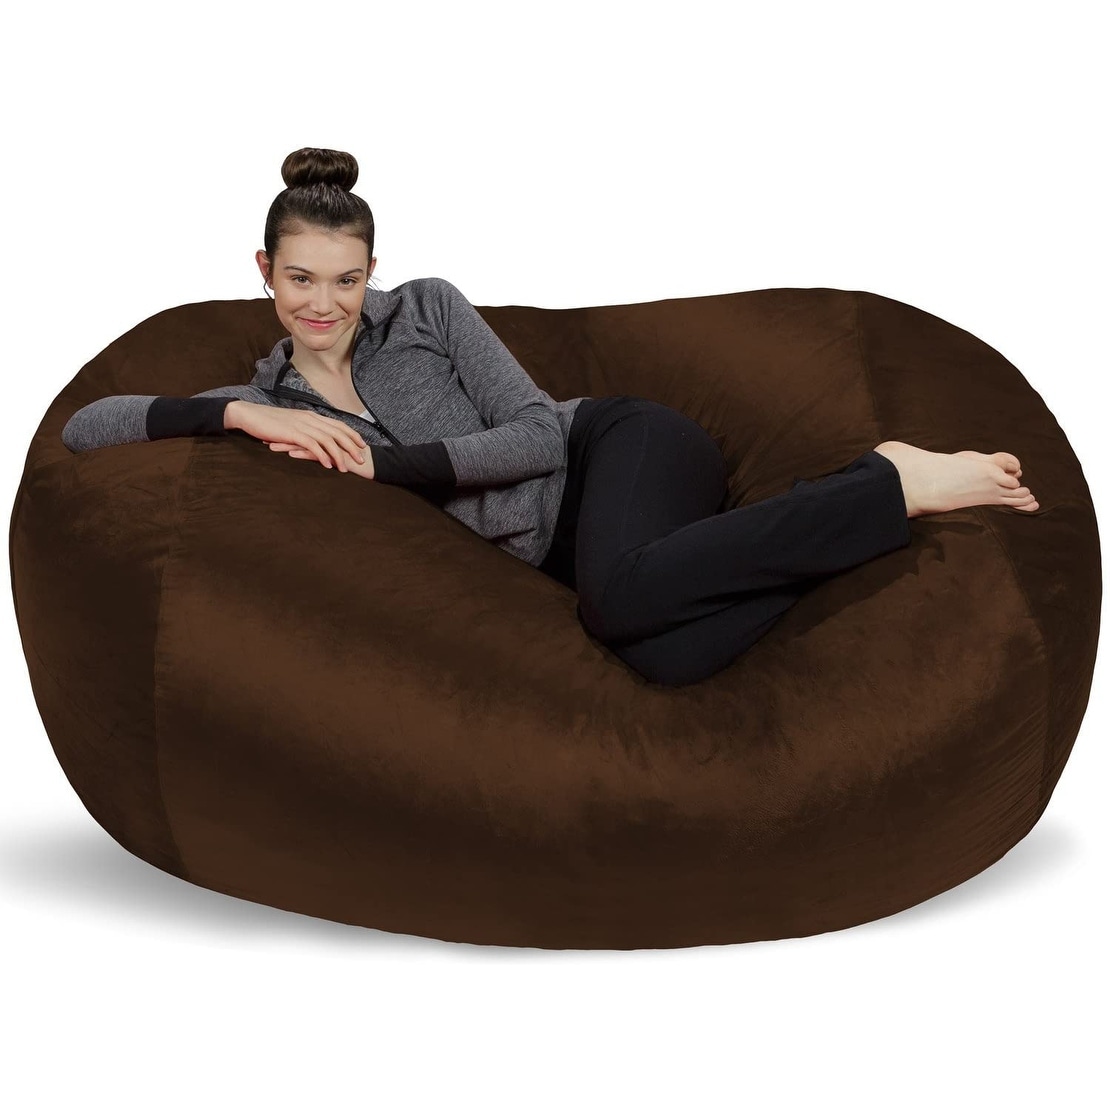  Chill Sack Bean Bag Chair: Giant 8' Memory Foam Furniture Bean  Bag - Big Sofa with Soft Micro Fiber Cover - Charcoal : Home & Kitchen